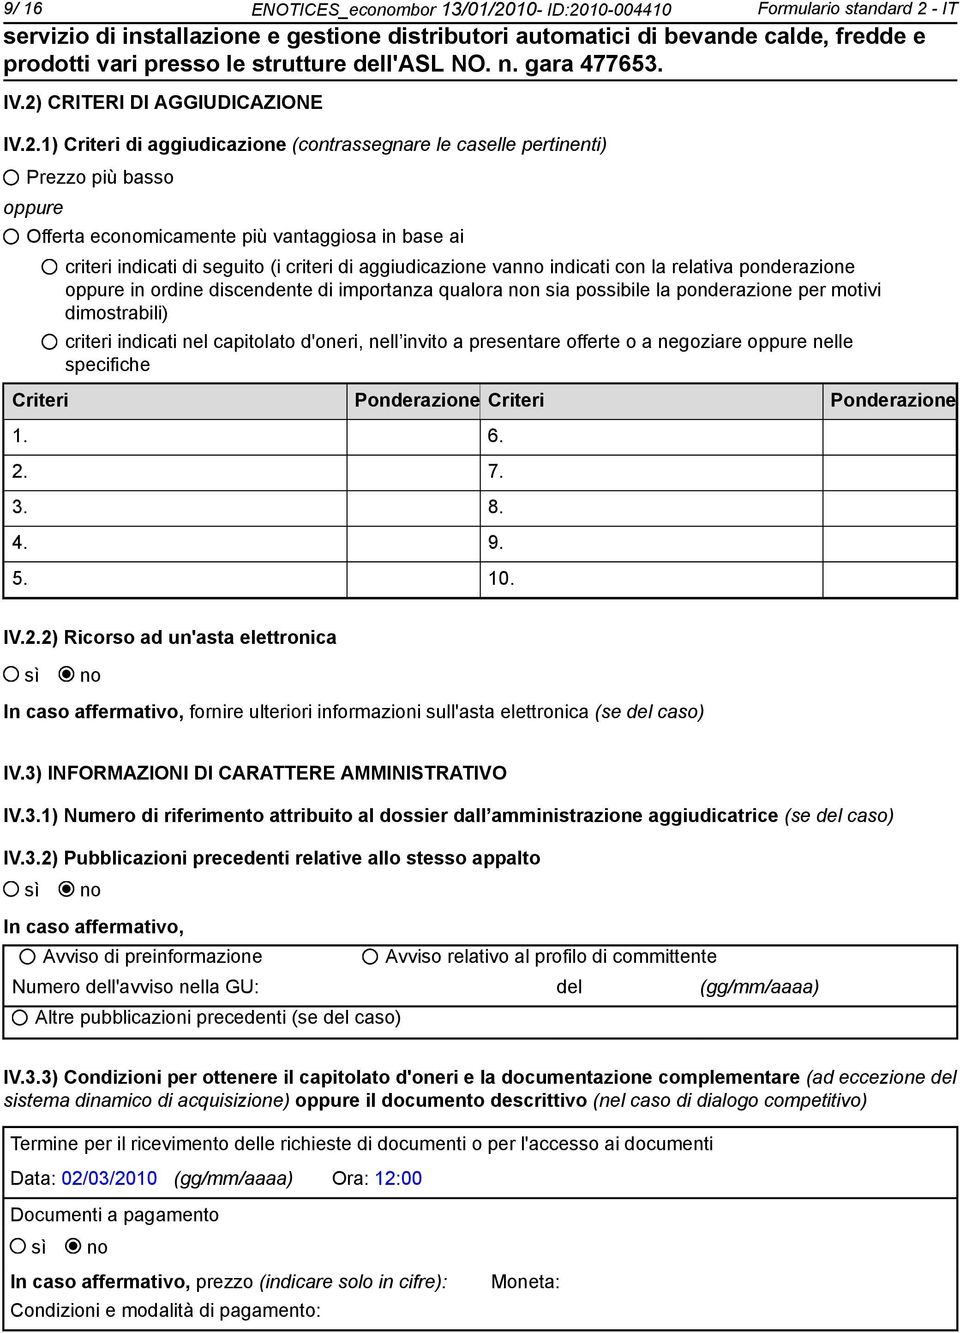 10-004410 Formulario standard 2 